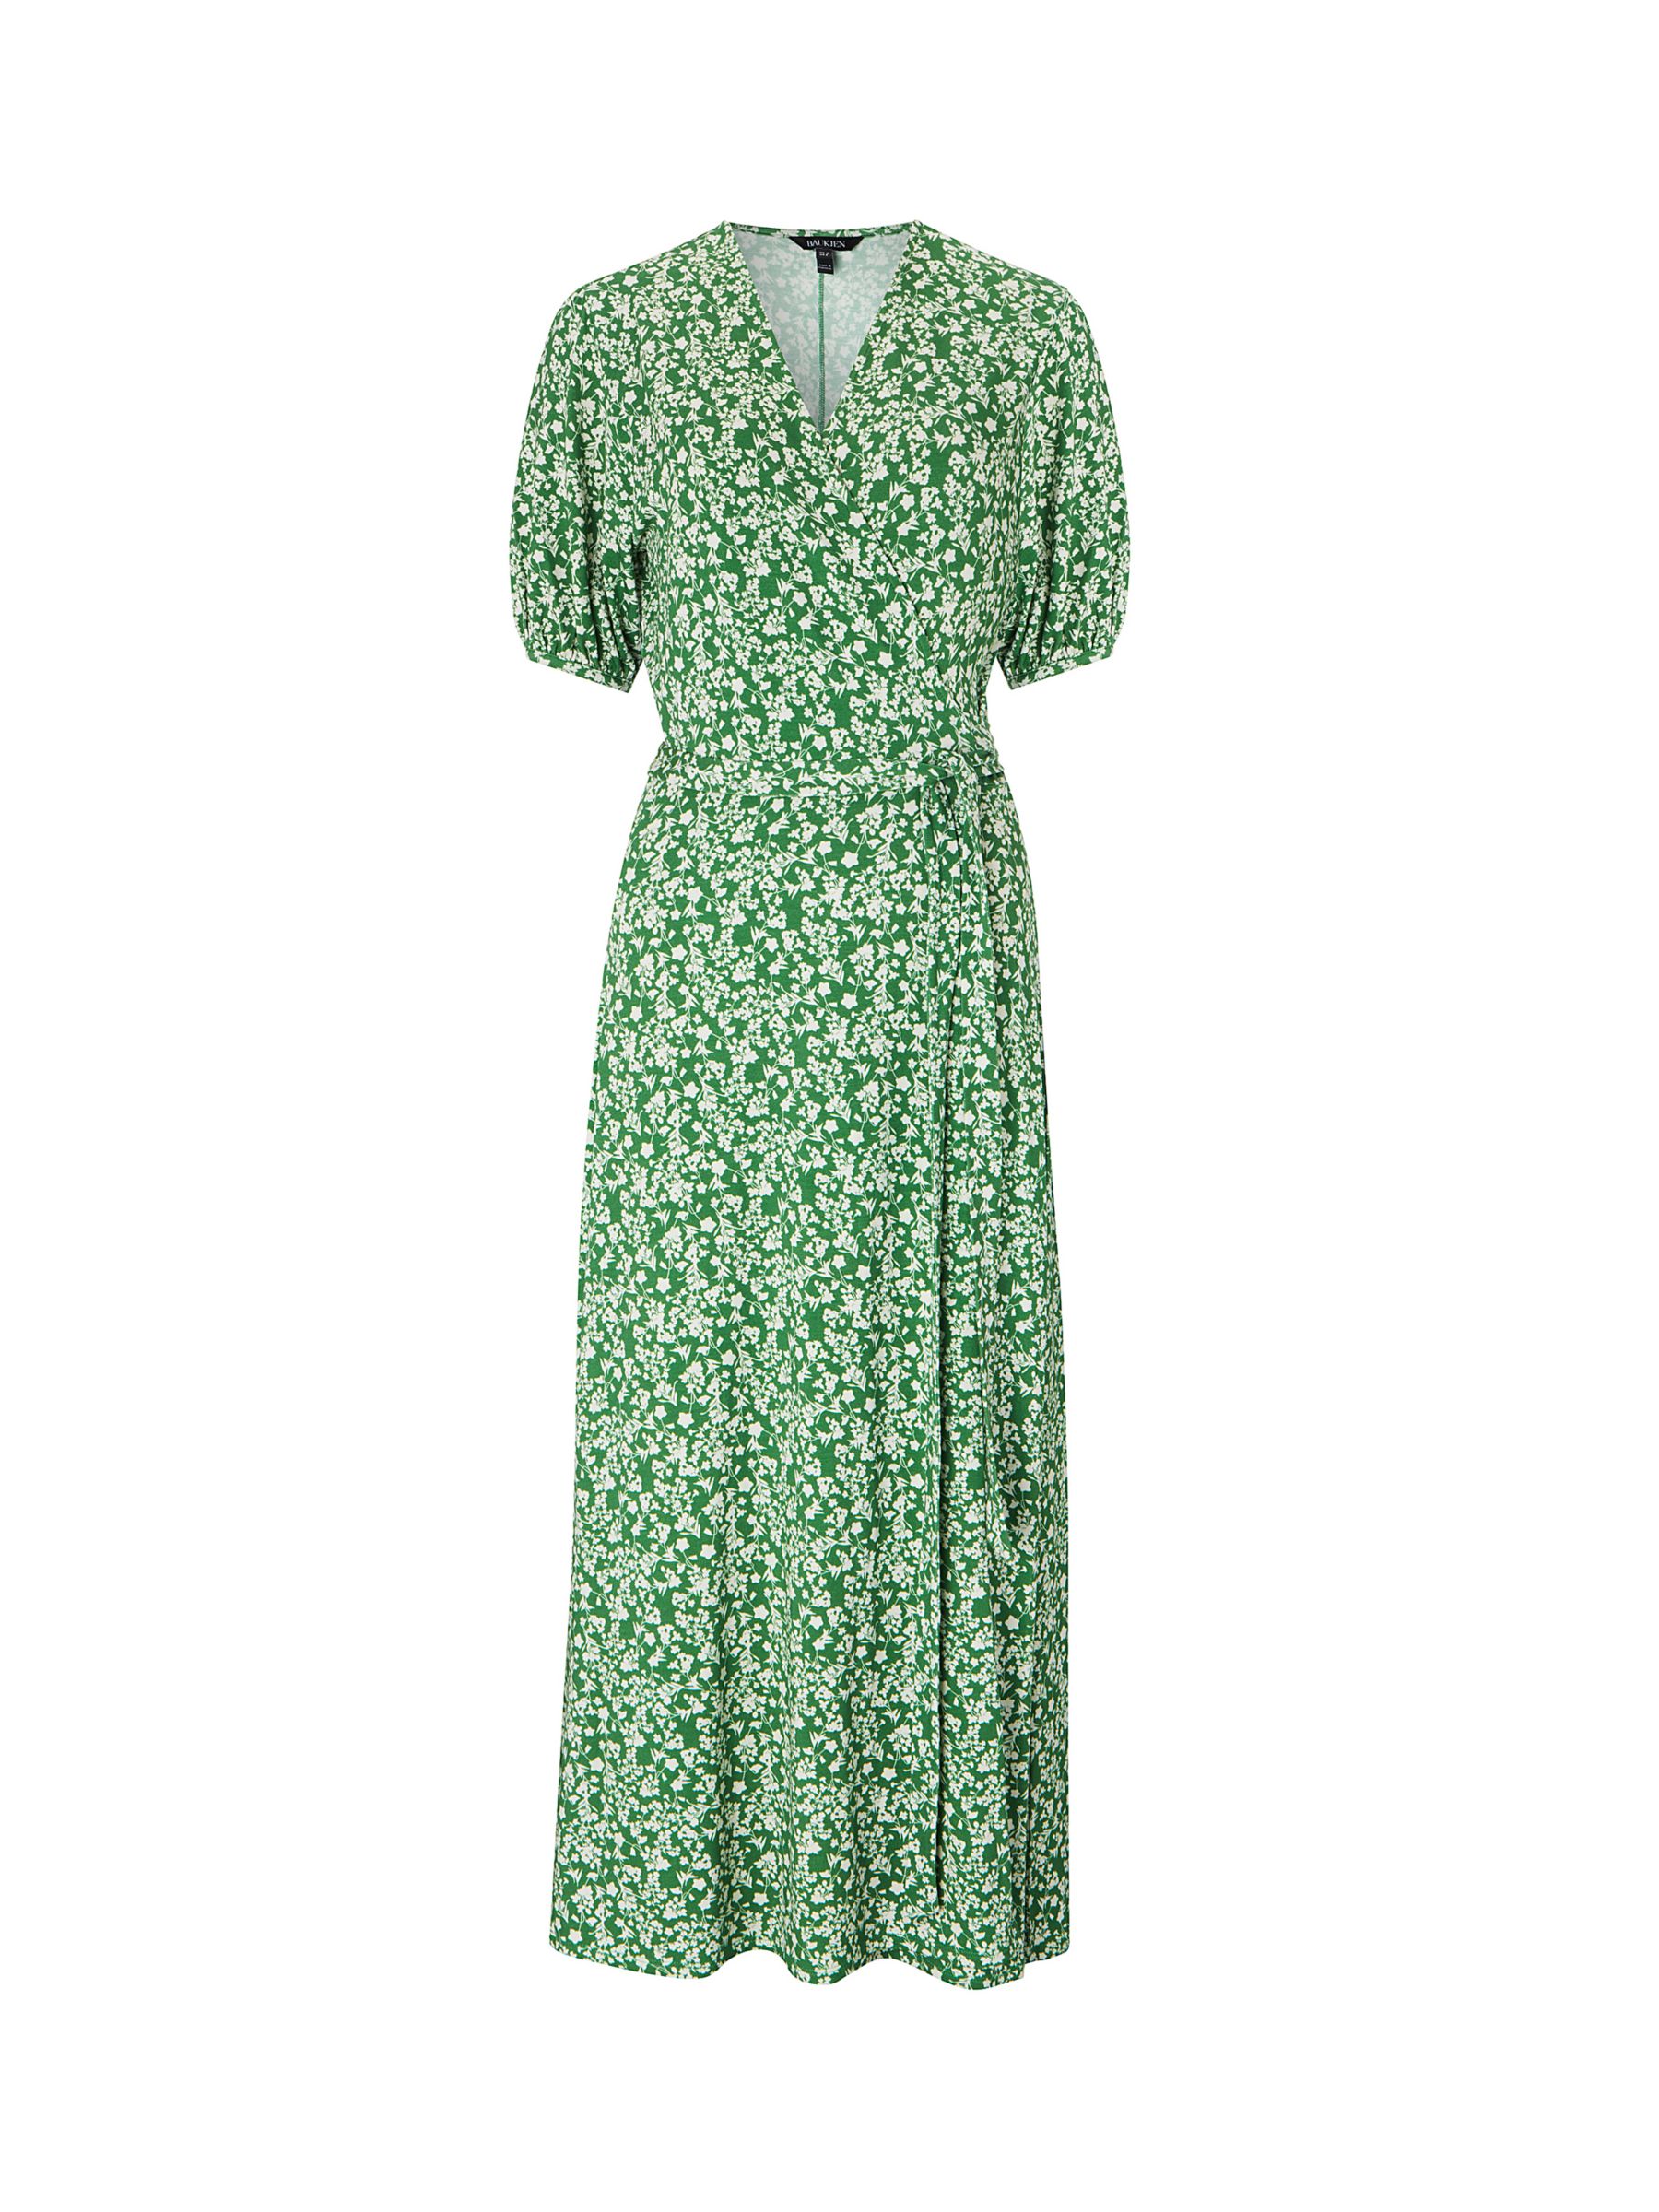 Baukjen Colette Foliage Print Midi Dress, Fern Green at John Lewis ...